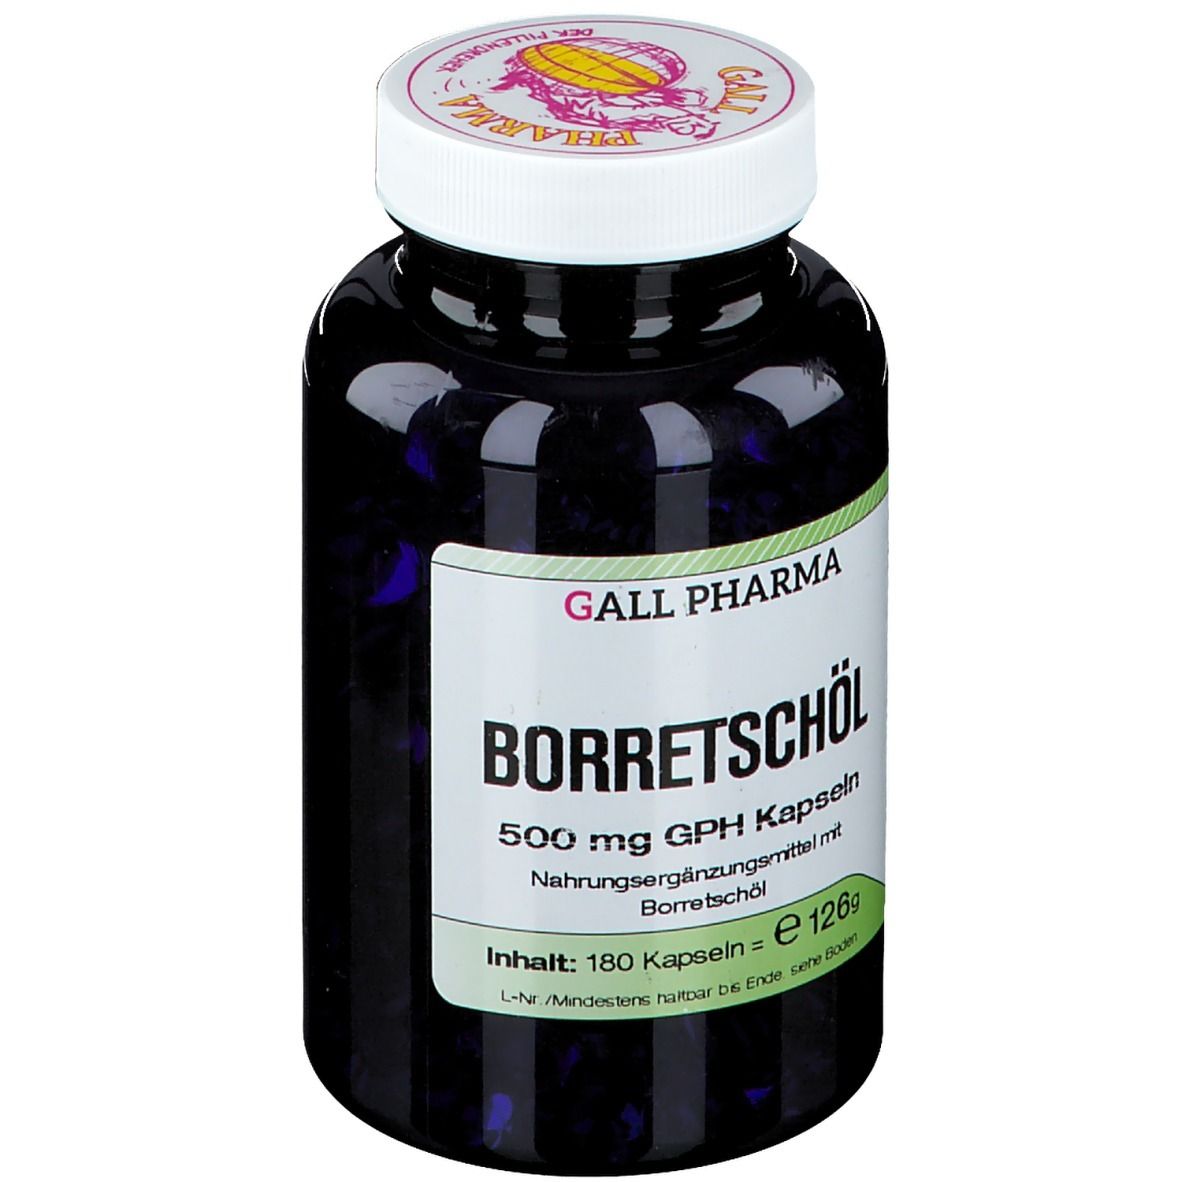 GALL PHARMA Borretschöl 500 mg